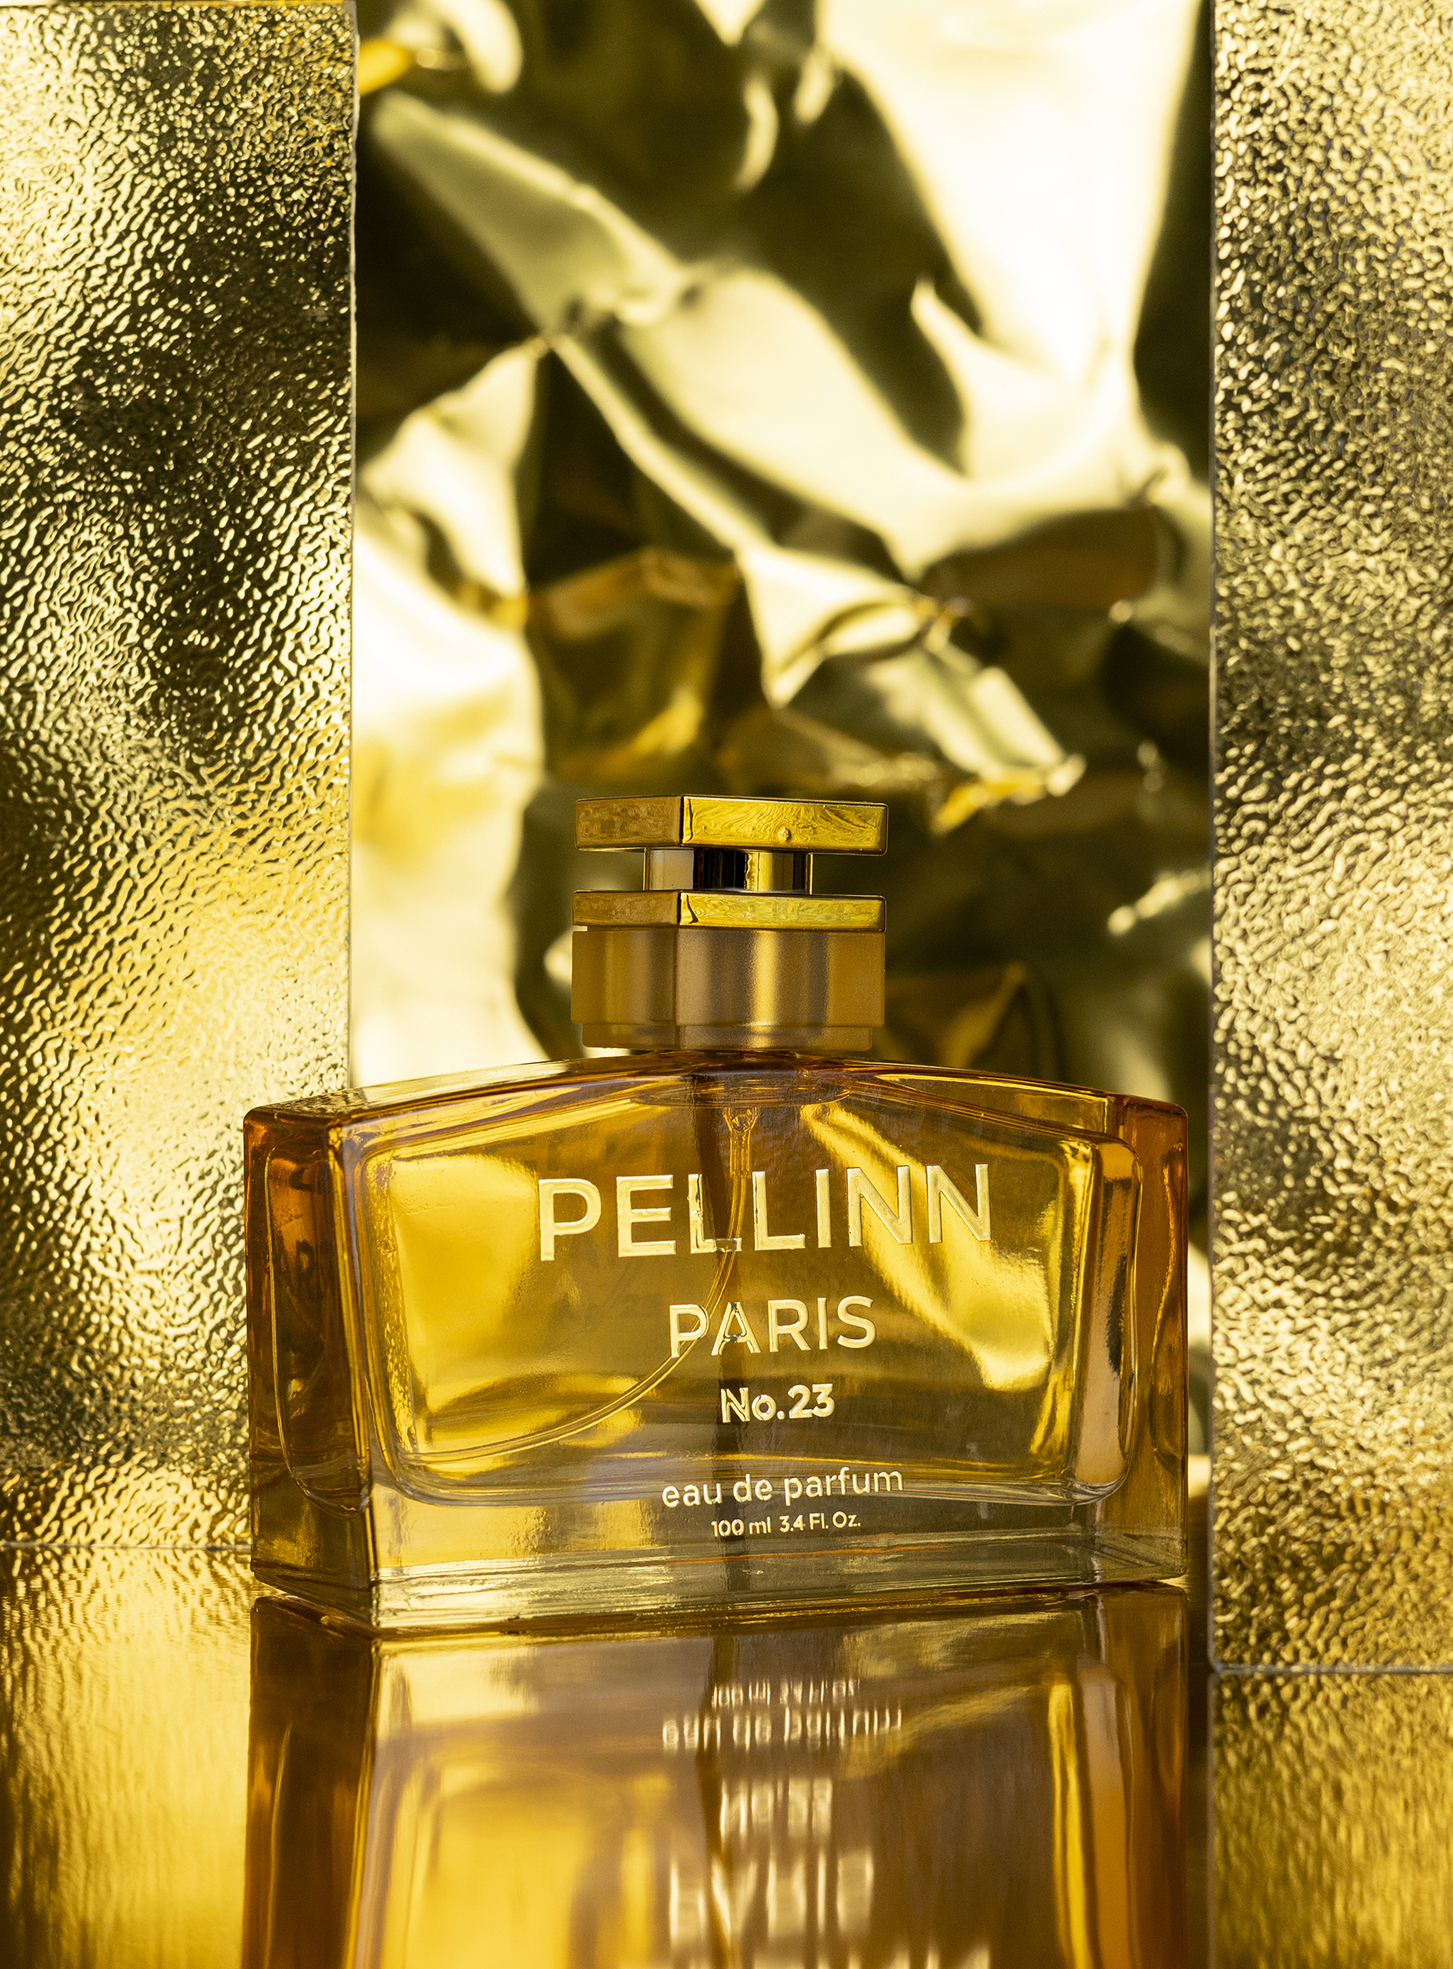 Pellinn Parfume Paris Hakkında